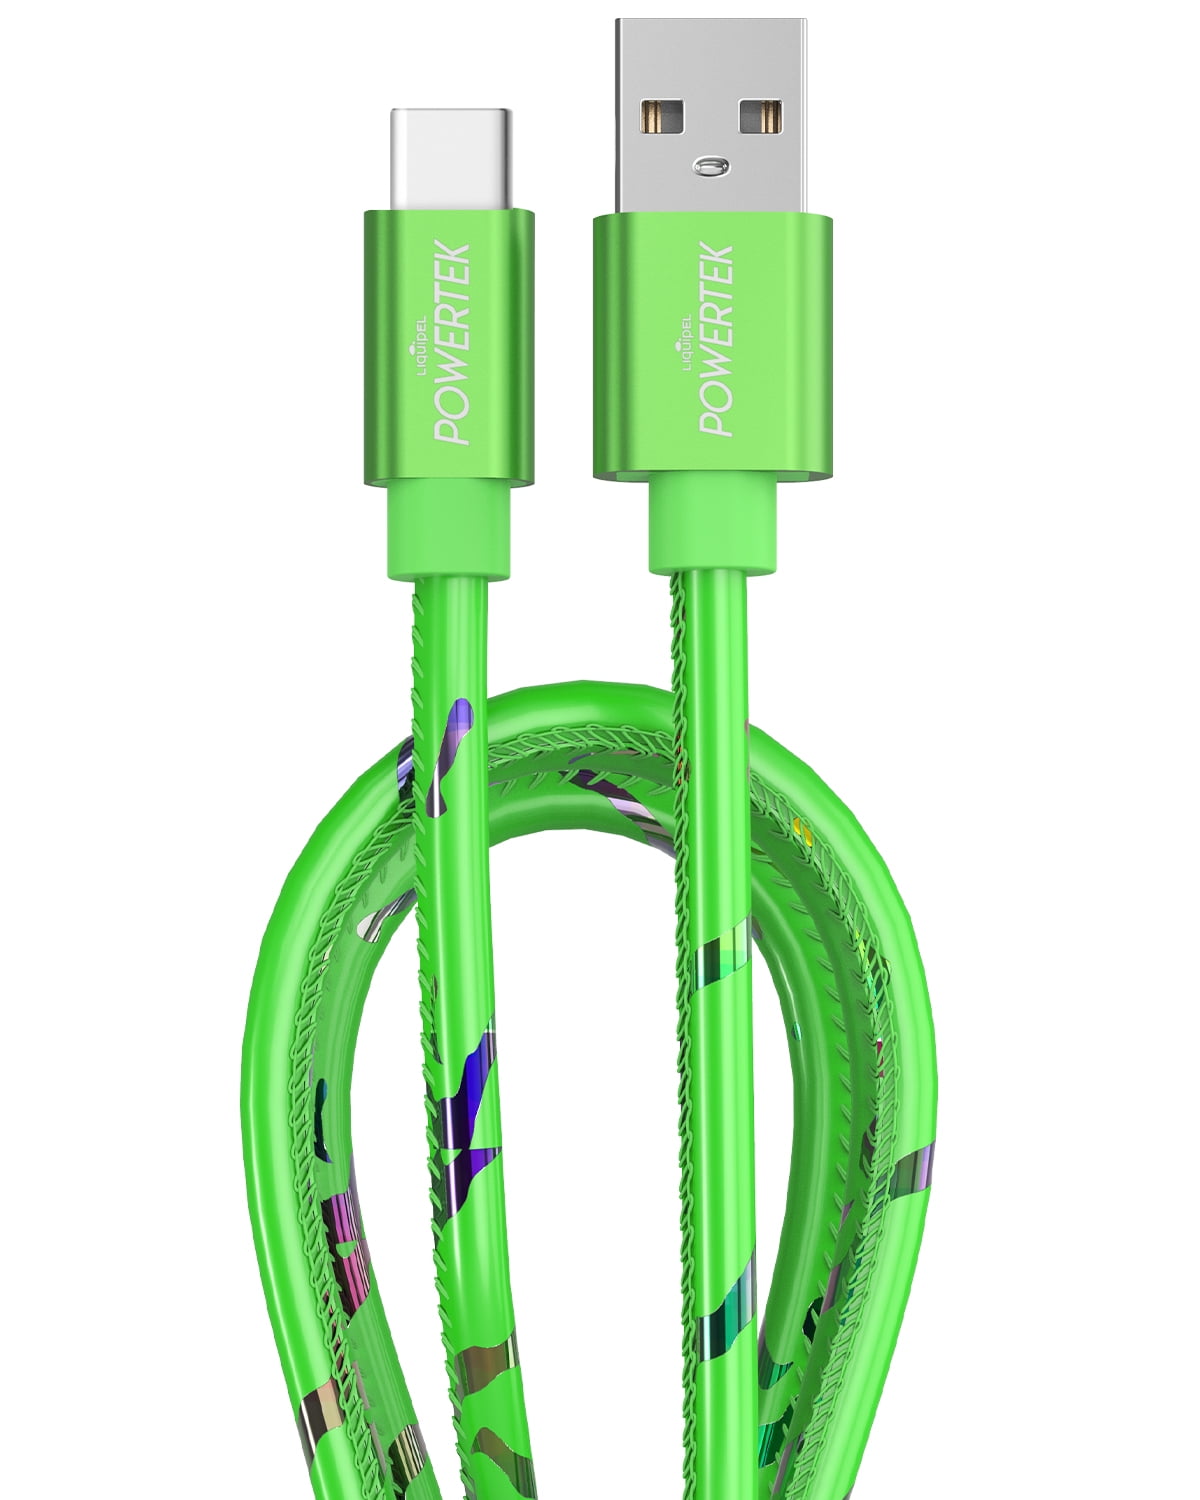 Macbook USB-C Charging Cable